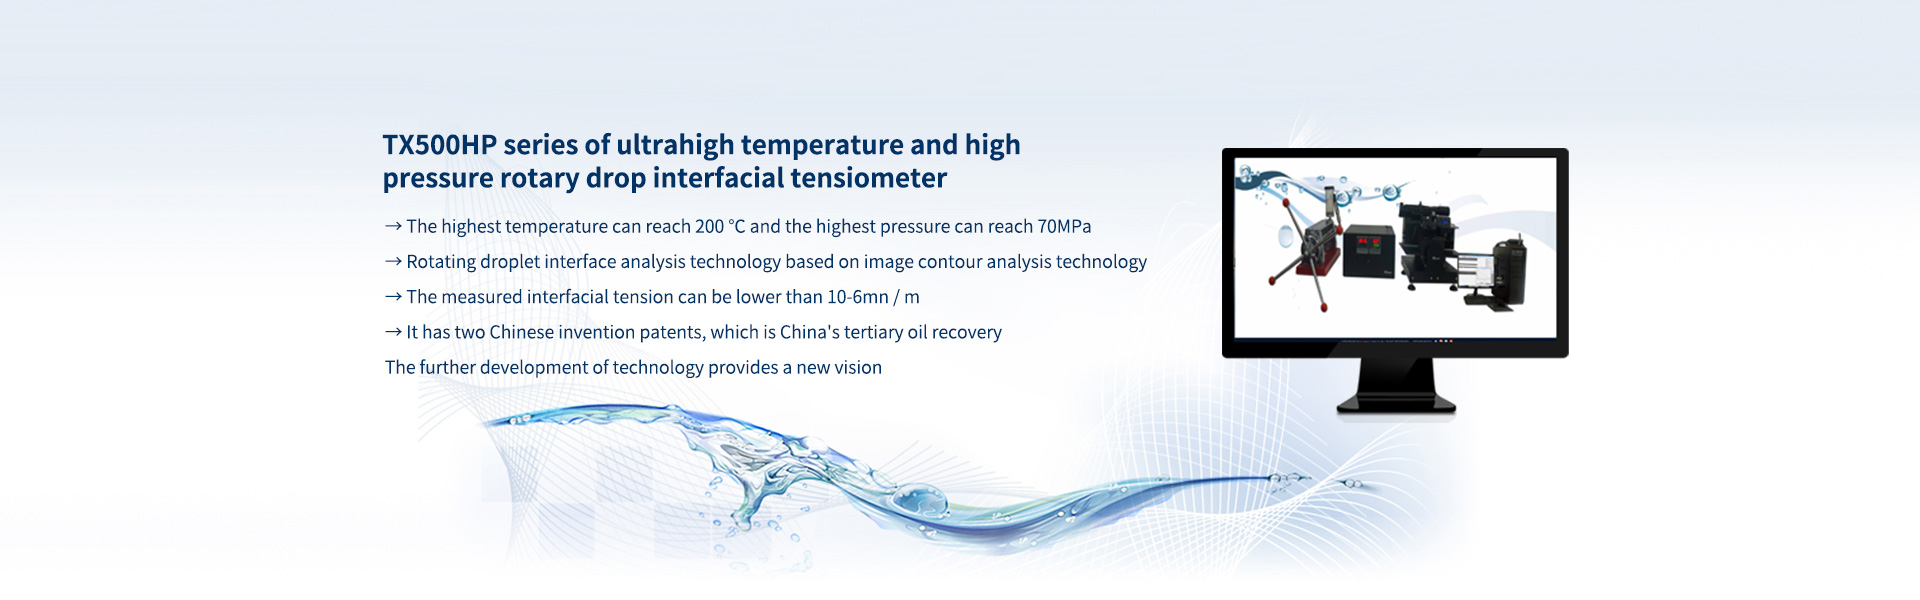 MXBAOHENG Automatic Surface Tensiometer Interfacial Tension Meter Platinum Plate Method BZY-201 Measuring Range 0-400mN/m